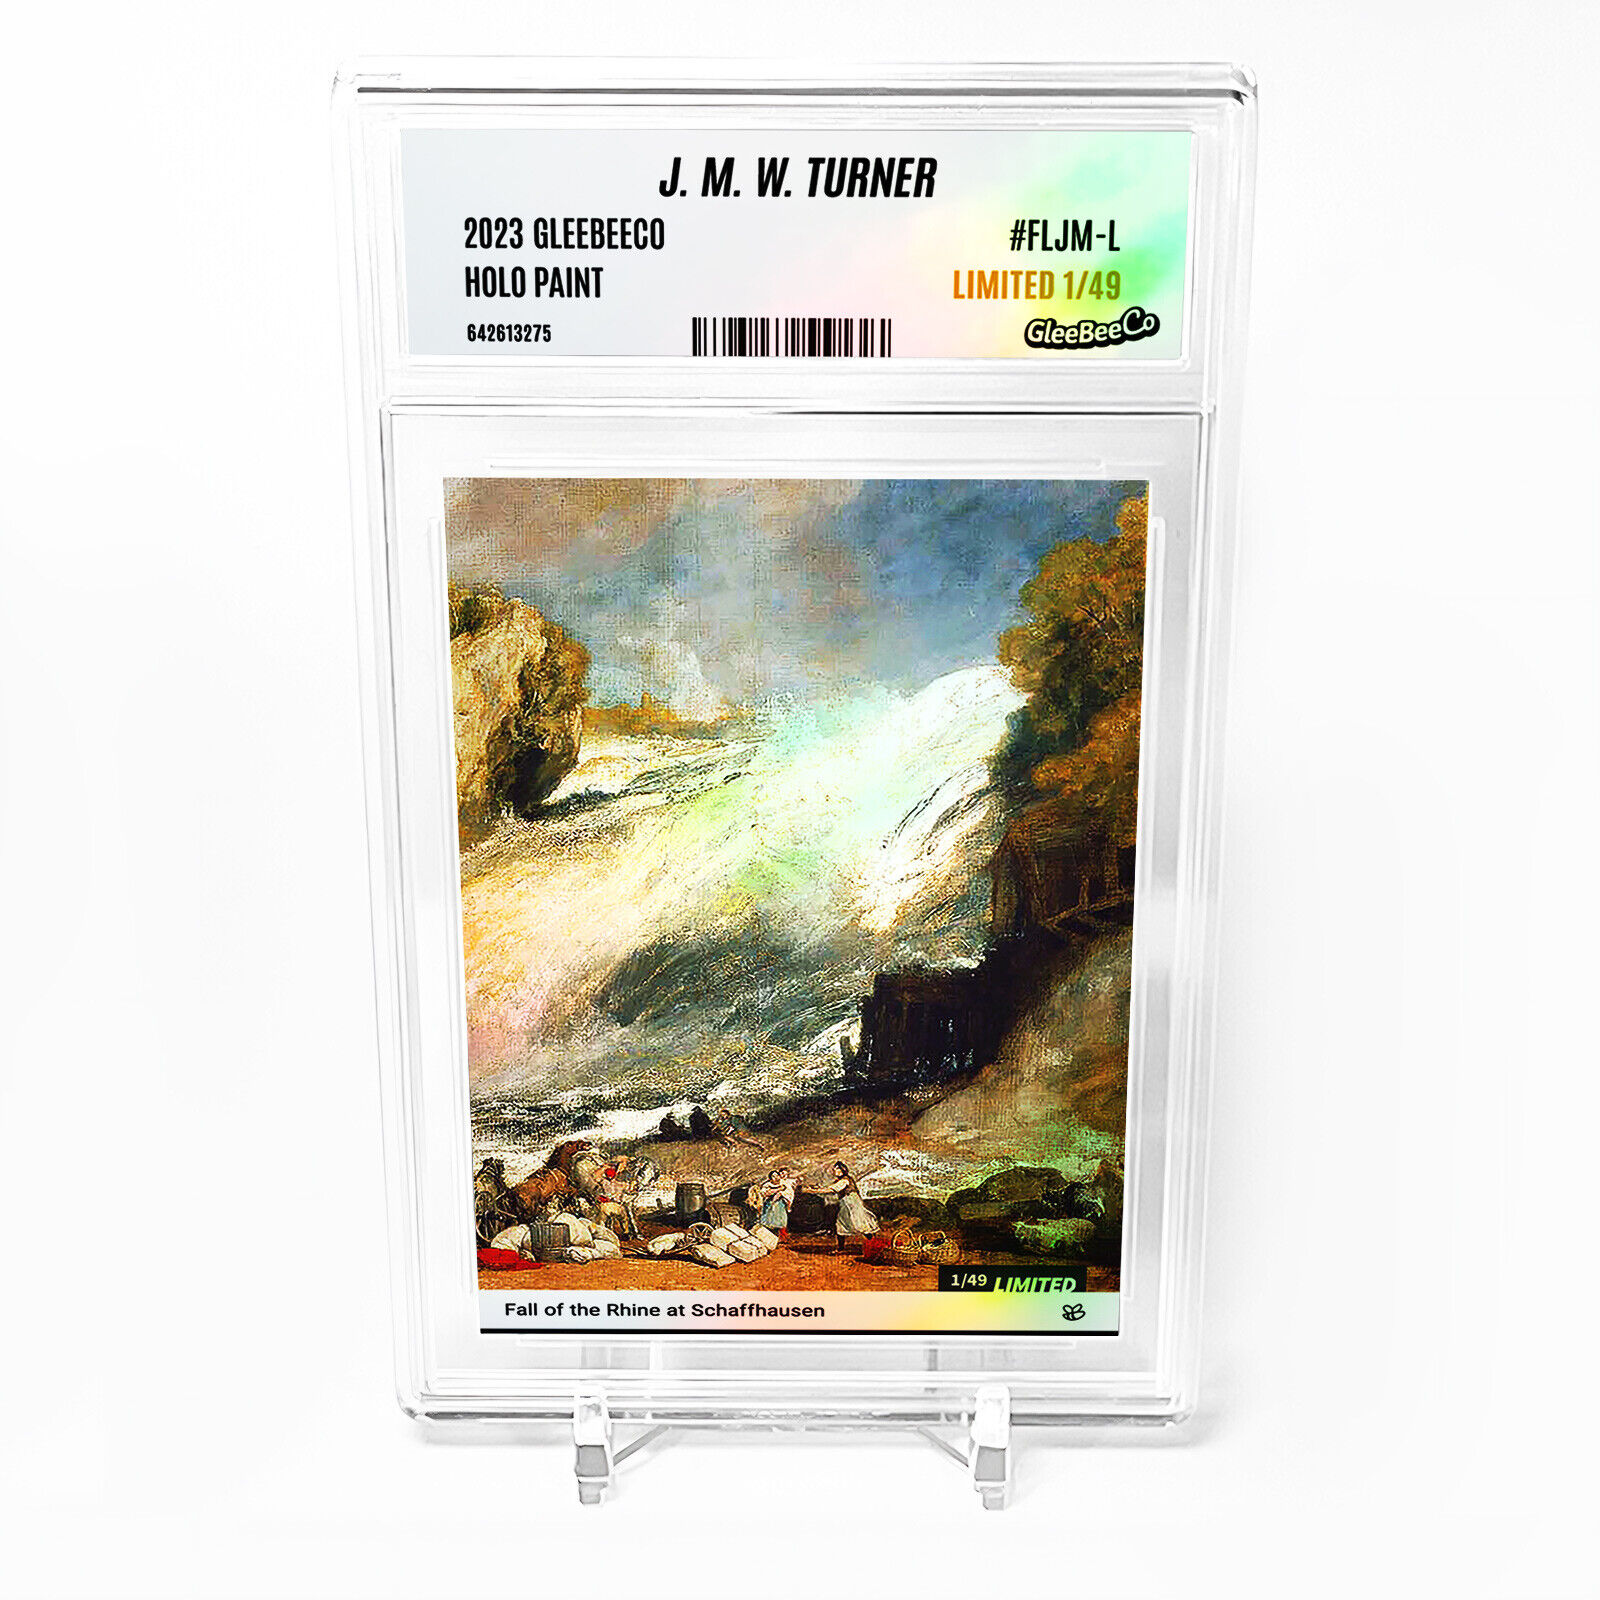 FALL OF THE RHINE AT SCHAFFHAUSEN (J. M. W. Turner) Card GleeBeeCo #FLJM-L /49